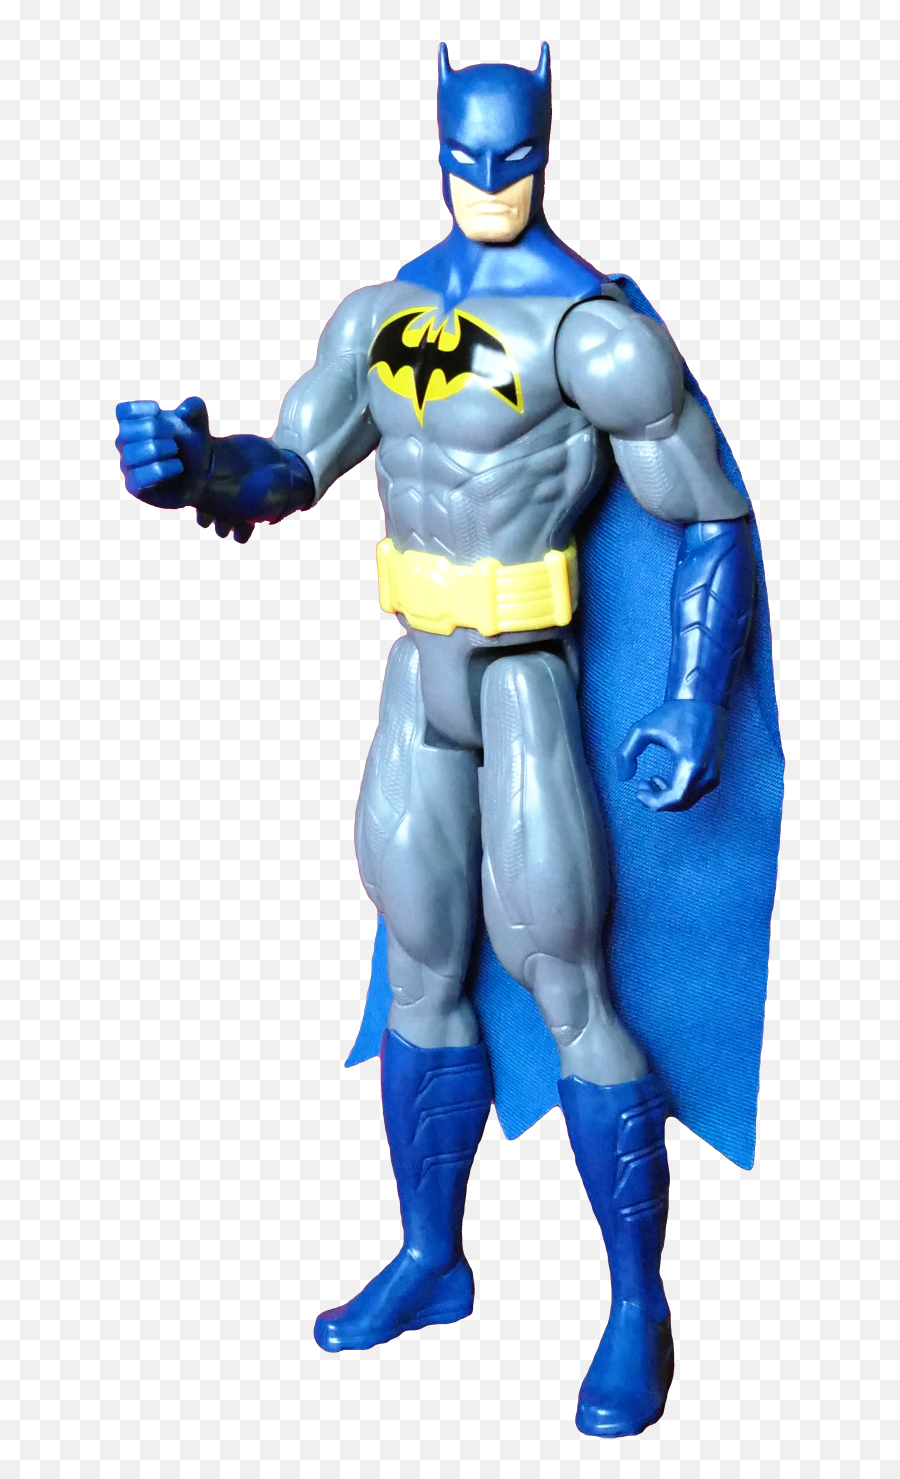 Batman Toy Png Image - Purepng Free Transparent Cc0 Png Batman Toy Png,Batman Transparent